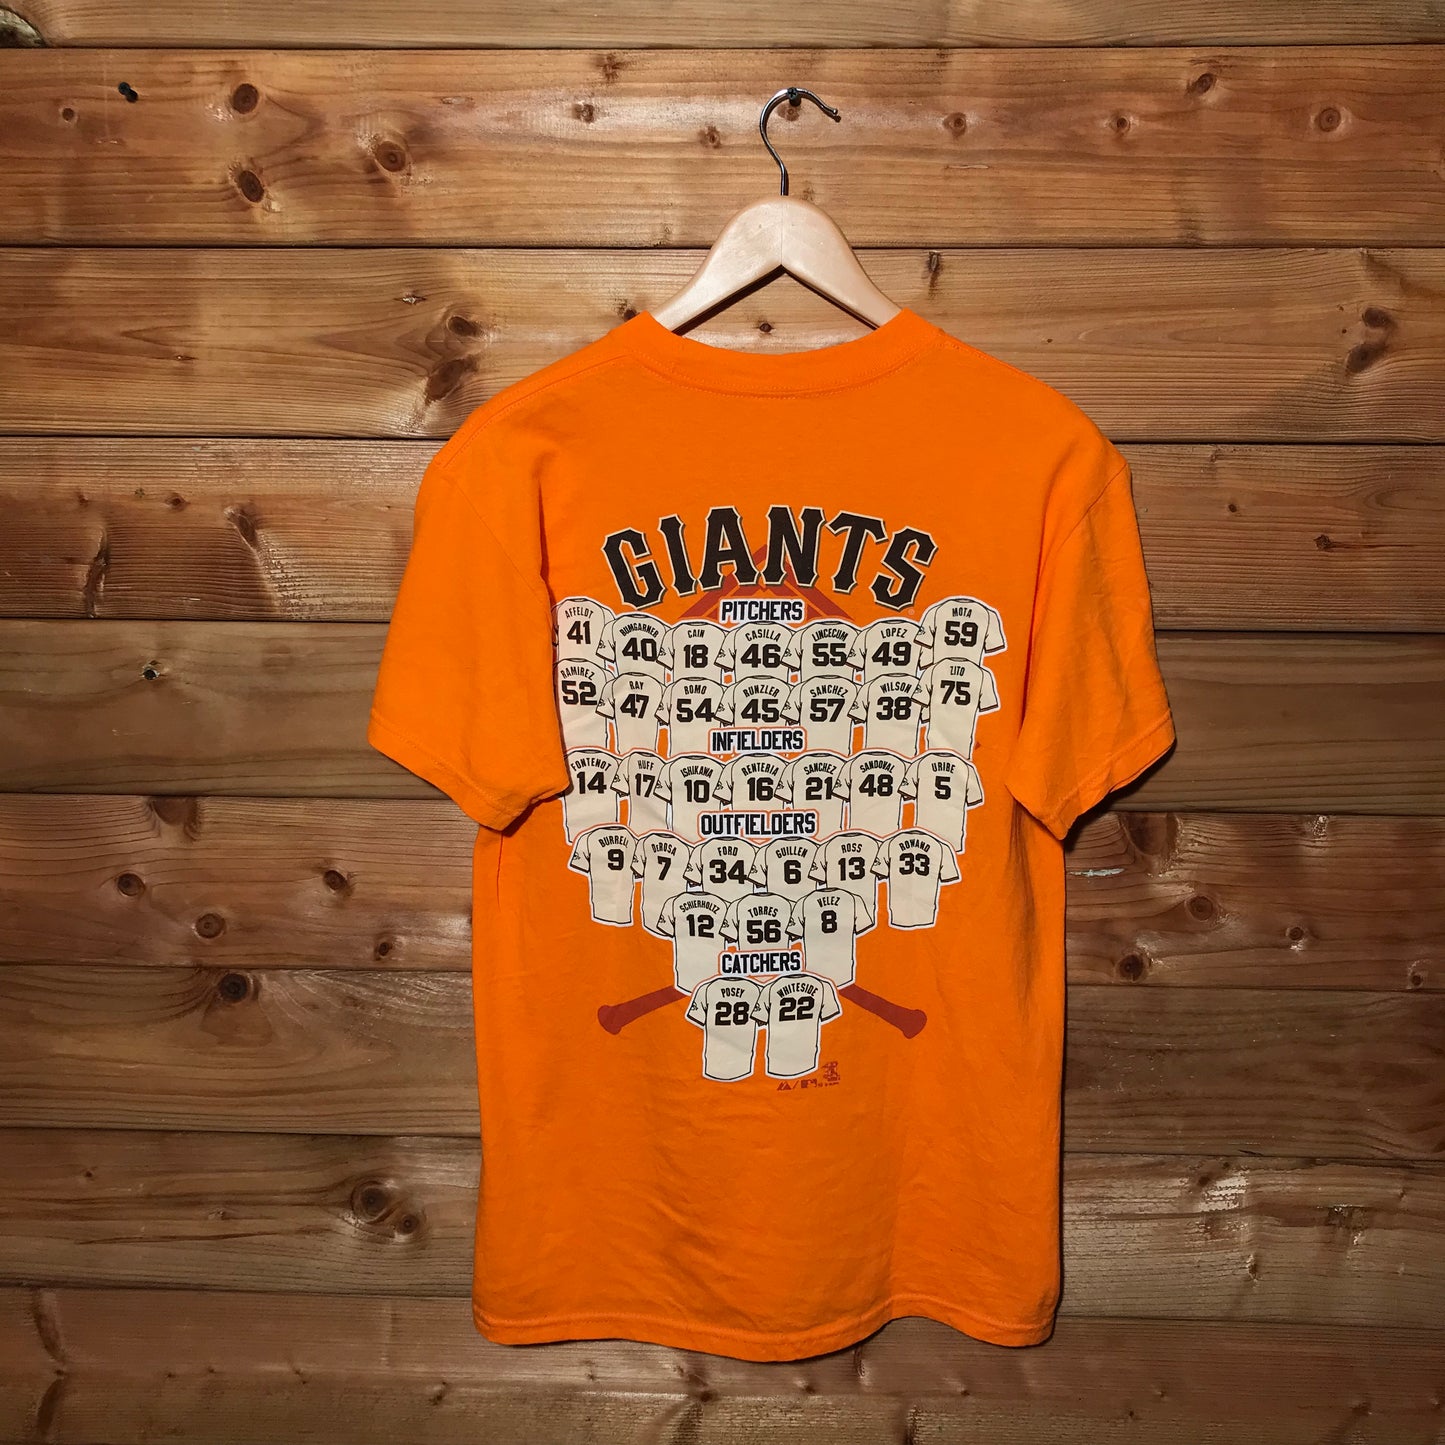 Majestic T-Shirt San Francisco Giants World Series Champions 2010 Size M